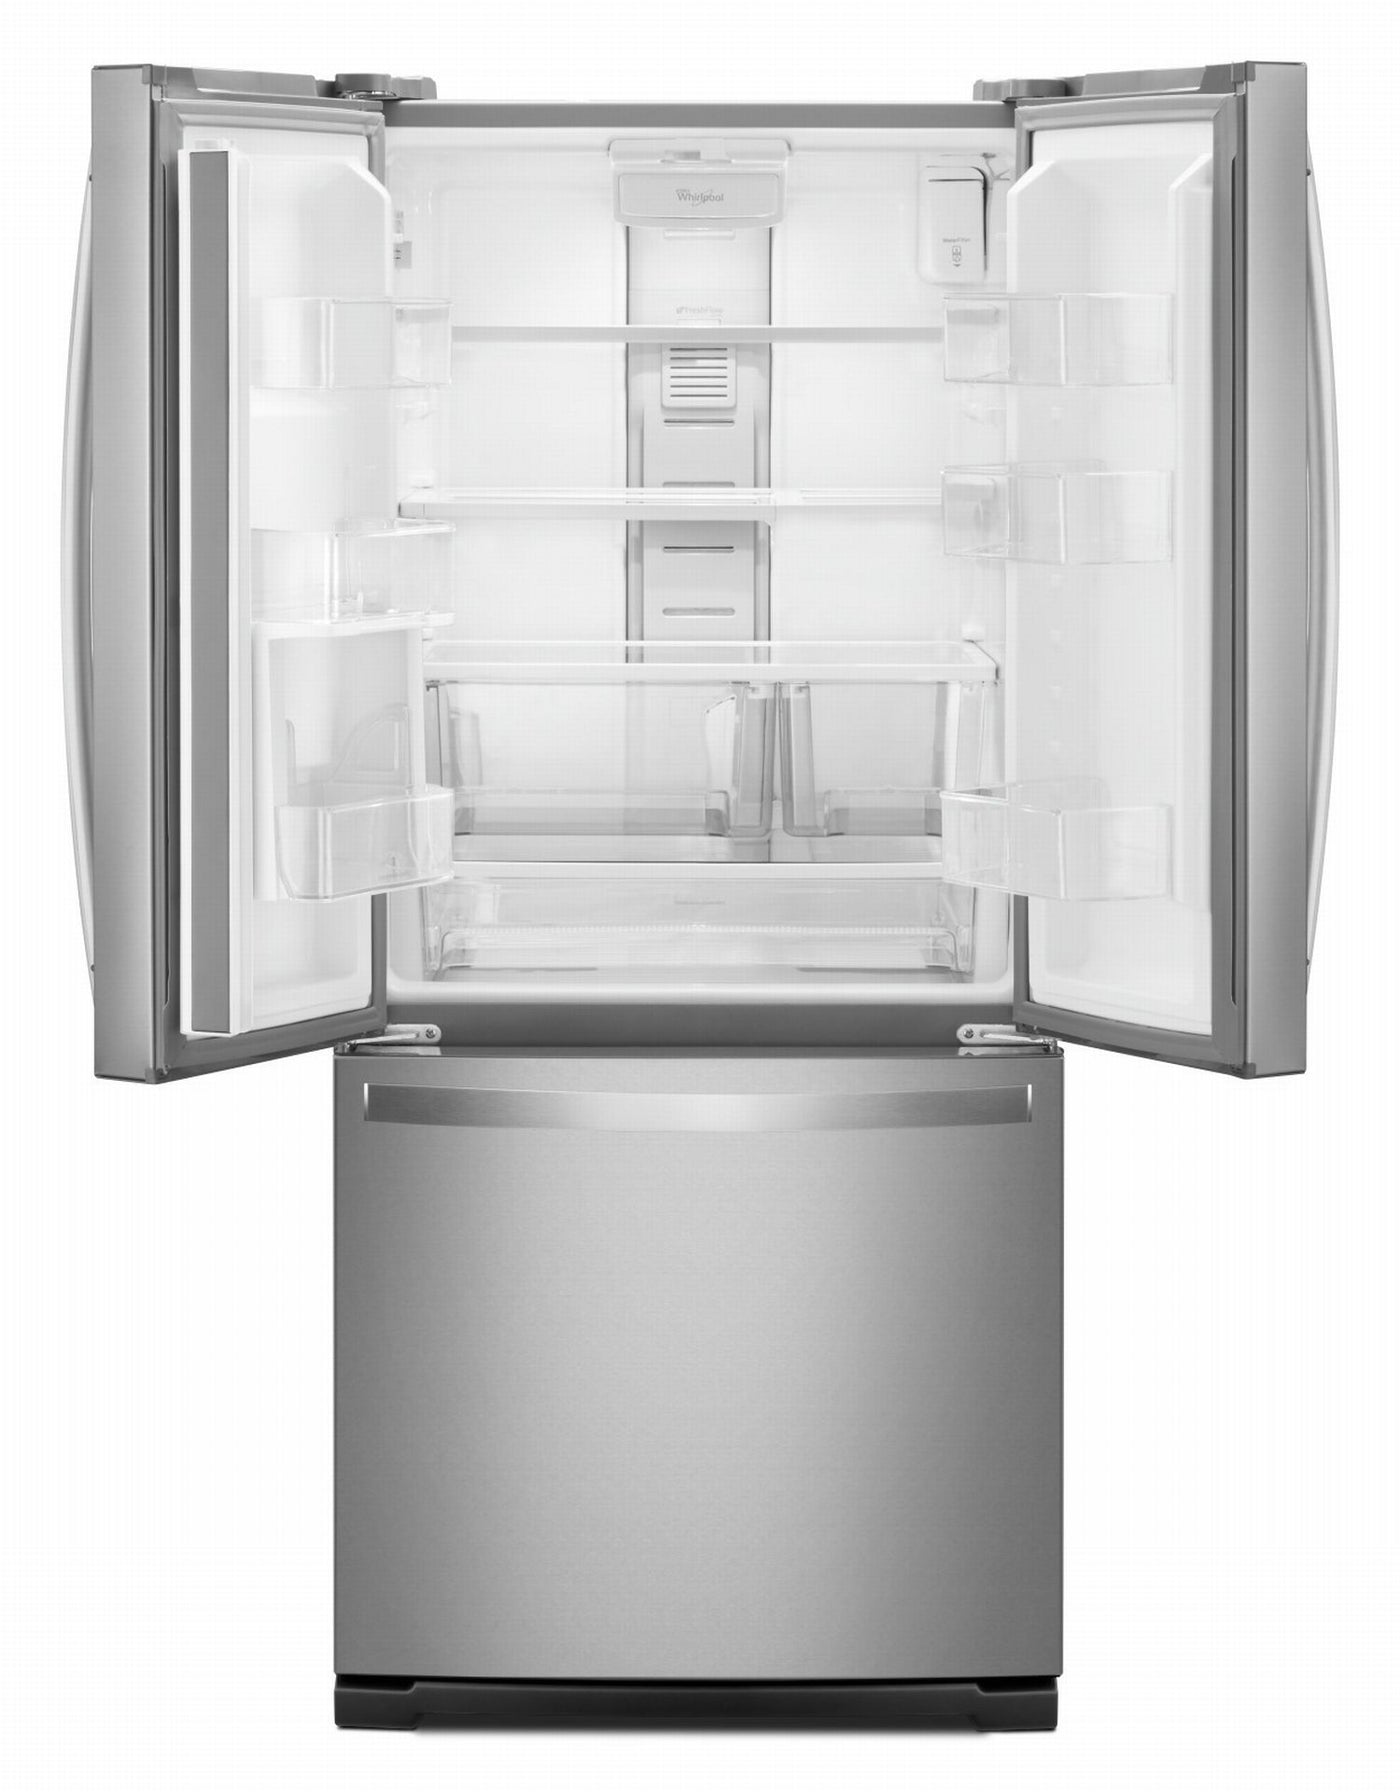 Whirlpool Fingerprint Resistant Stainless Steel Finish French Door Refrigerator (20 Cu. Ft.) - WRF560SEHZ